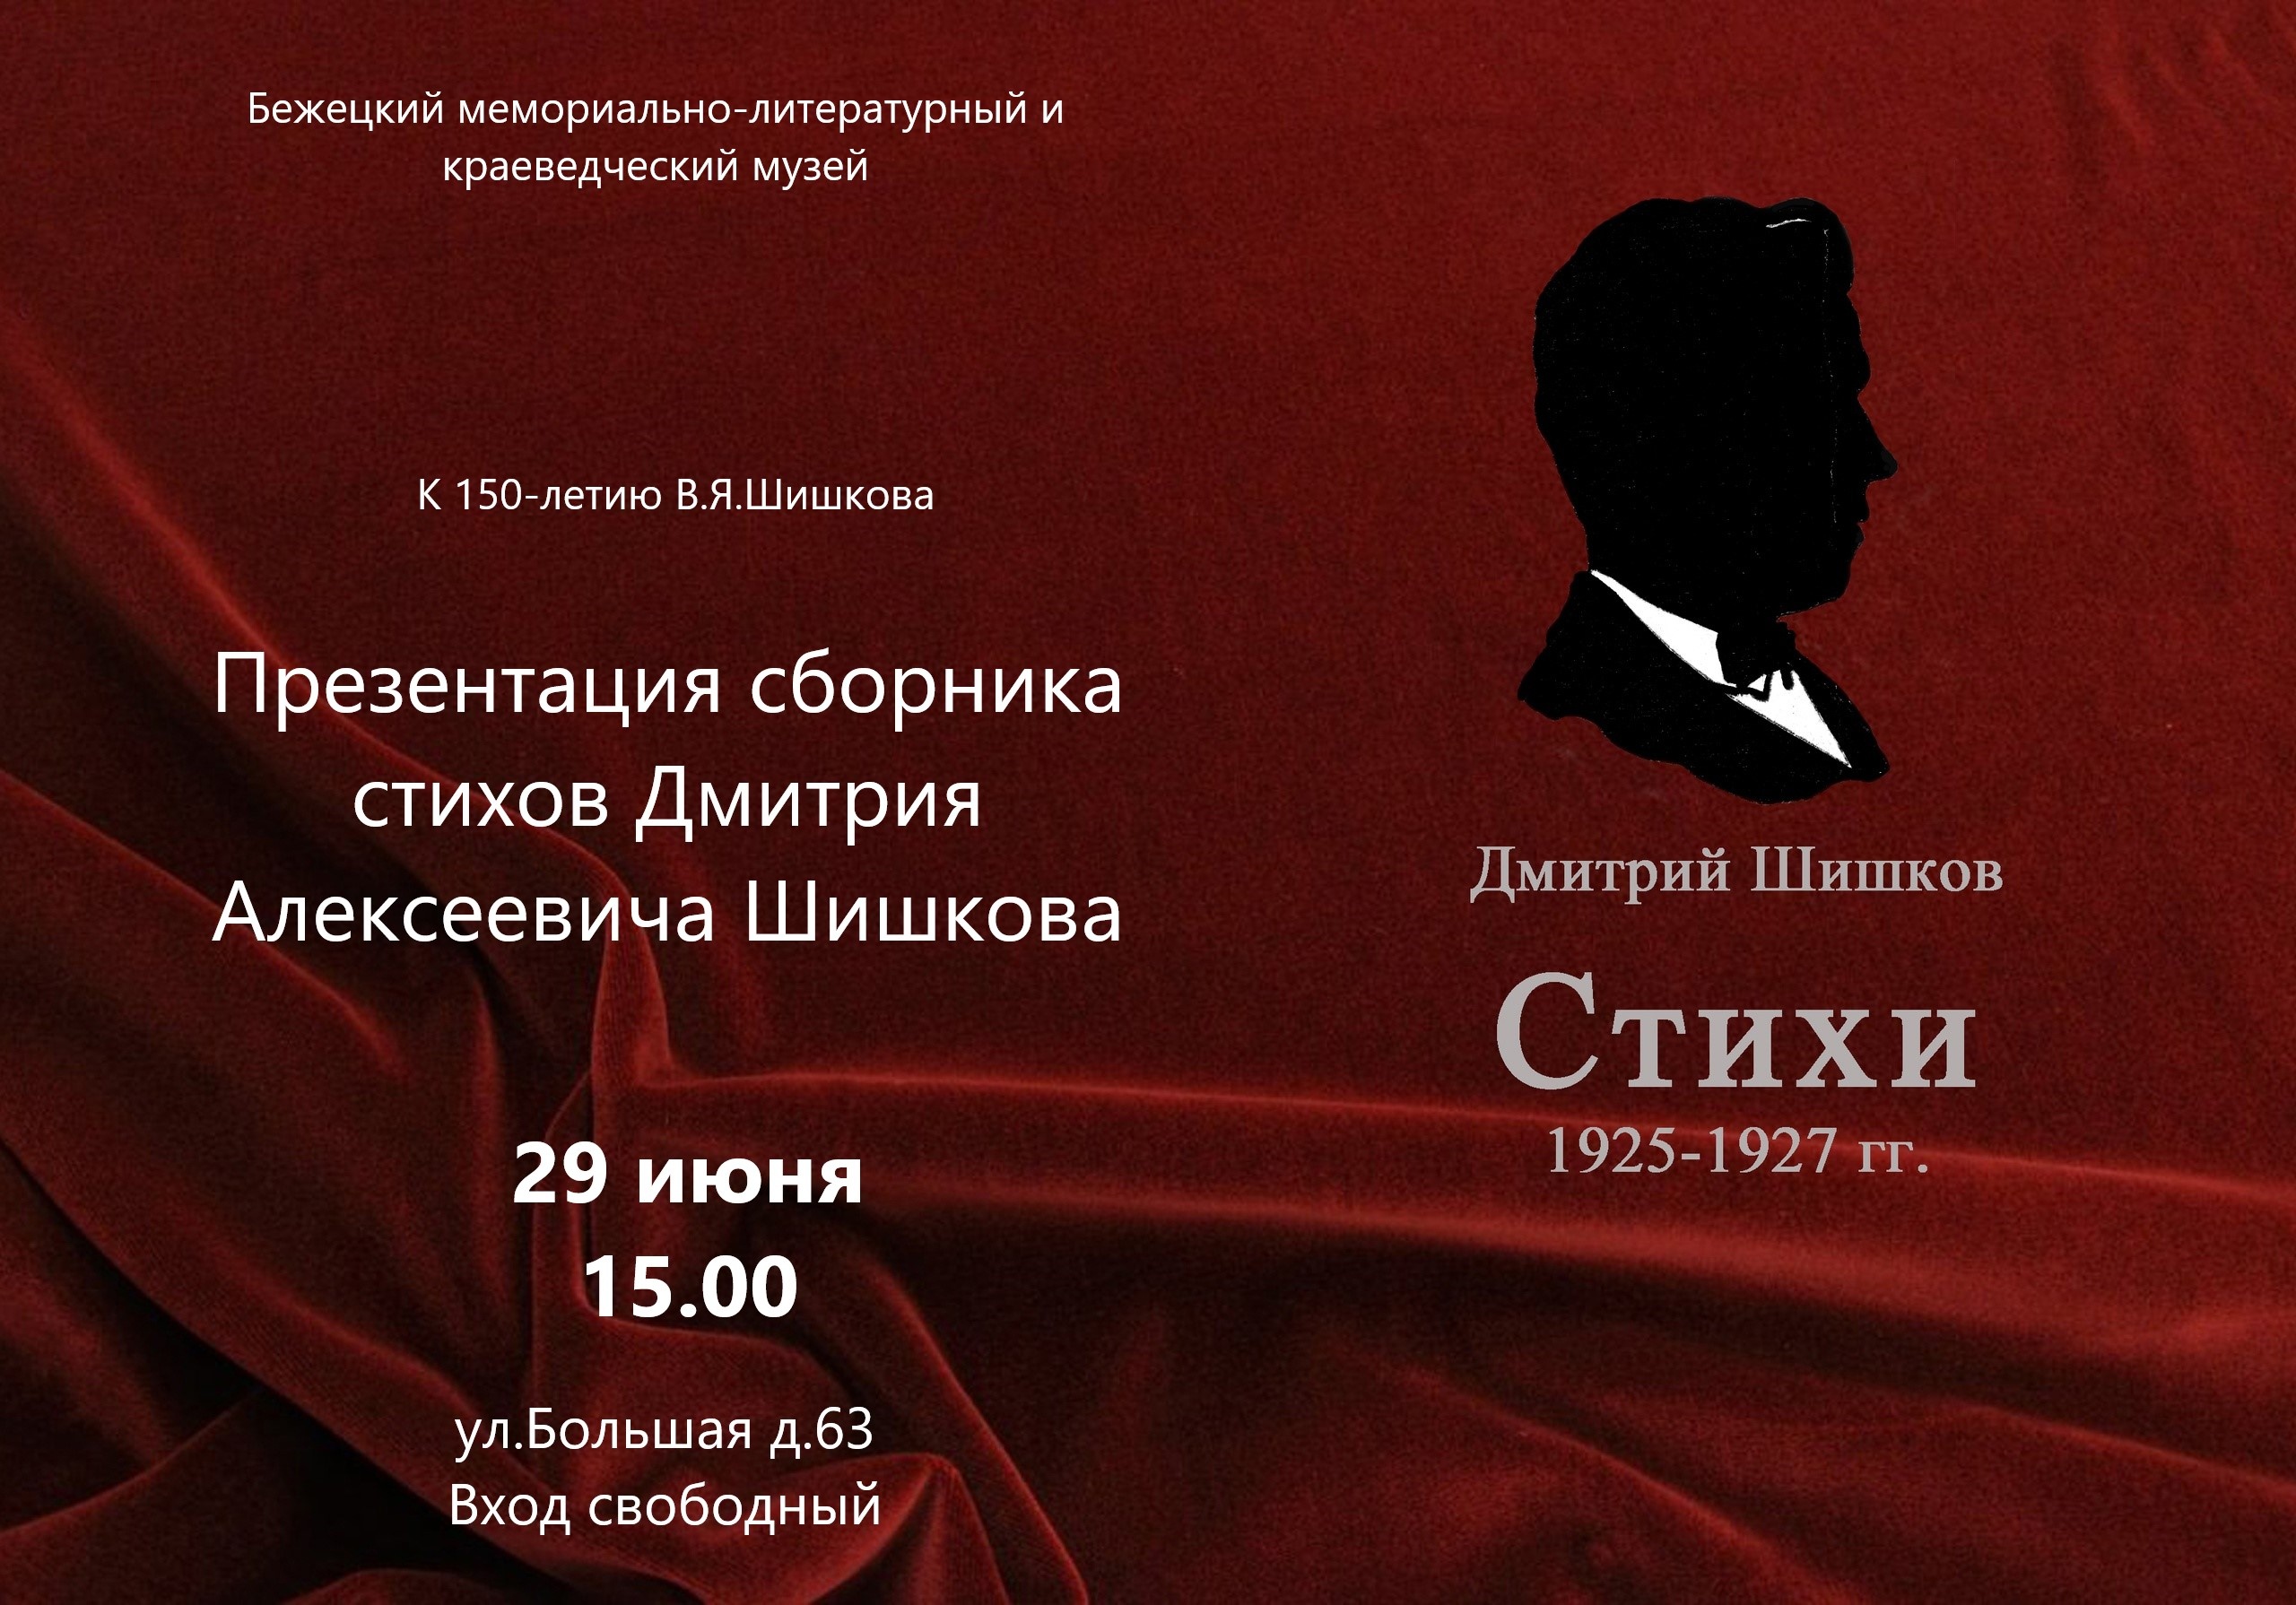 Жителей и гостей Бежецка приглашают на презентацию сборника стихов Вячеслава Шишкова